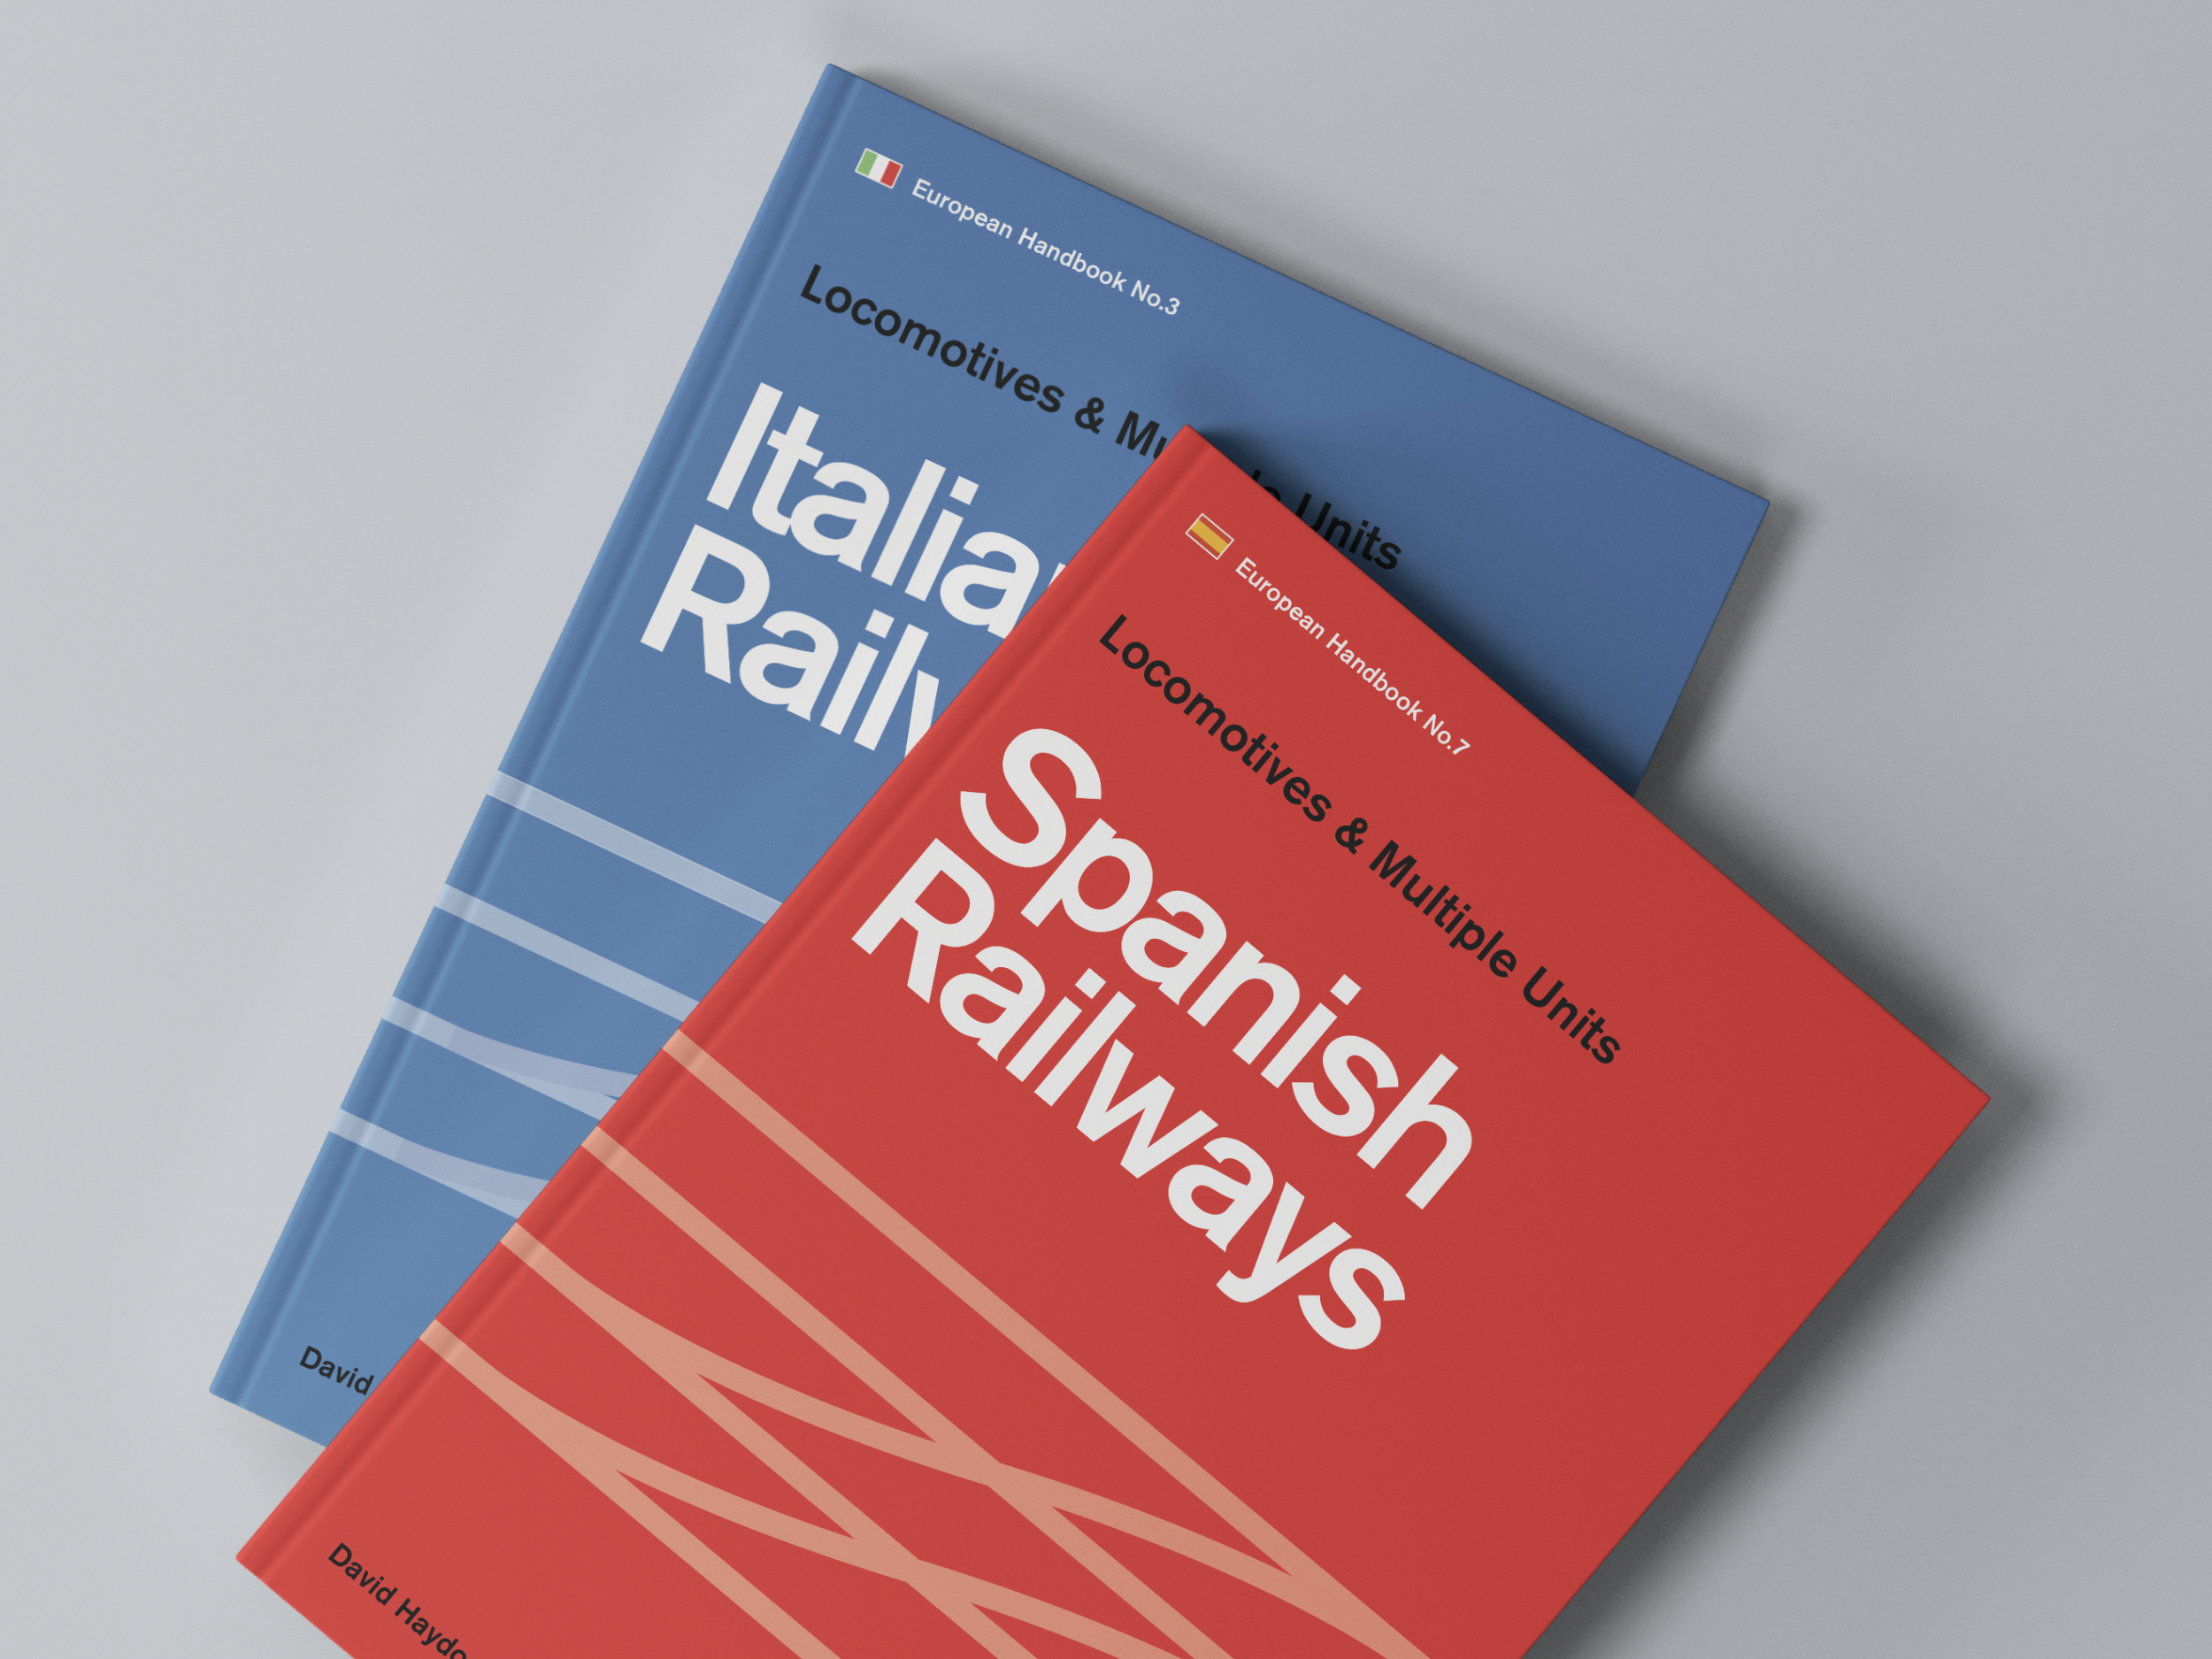 European Railways Book Series Covers